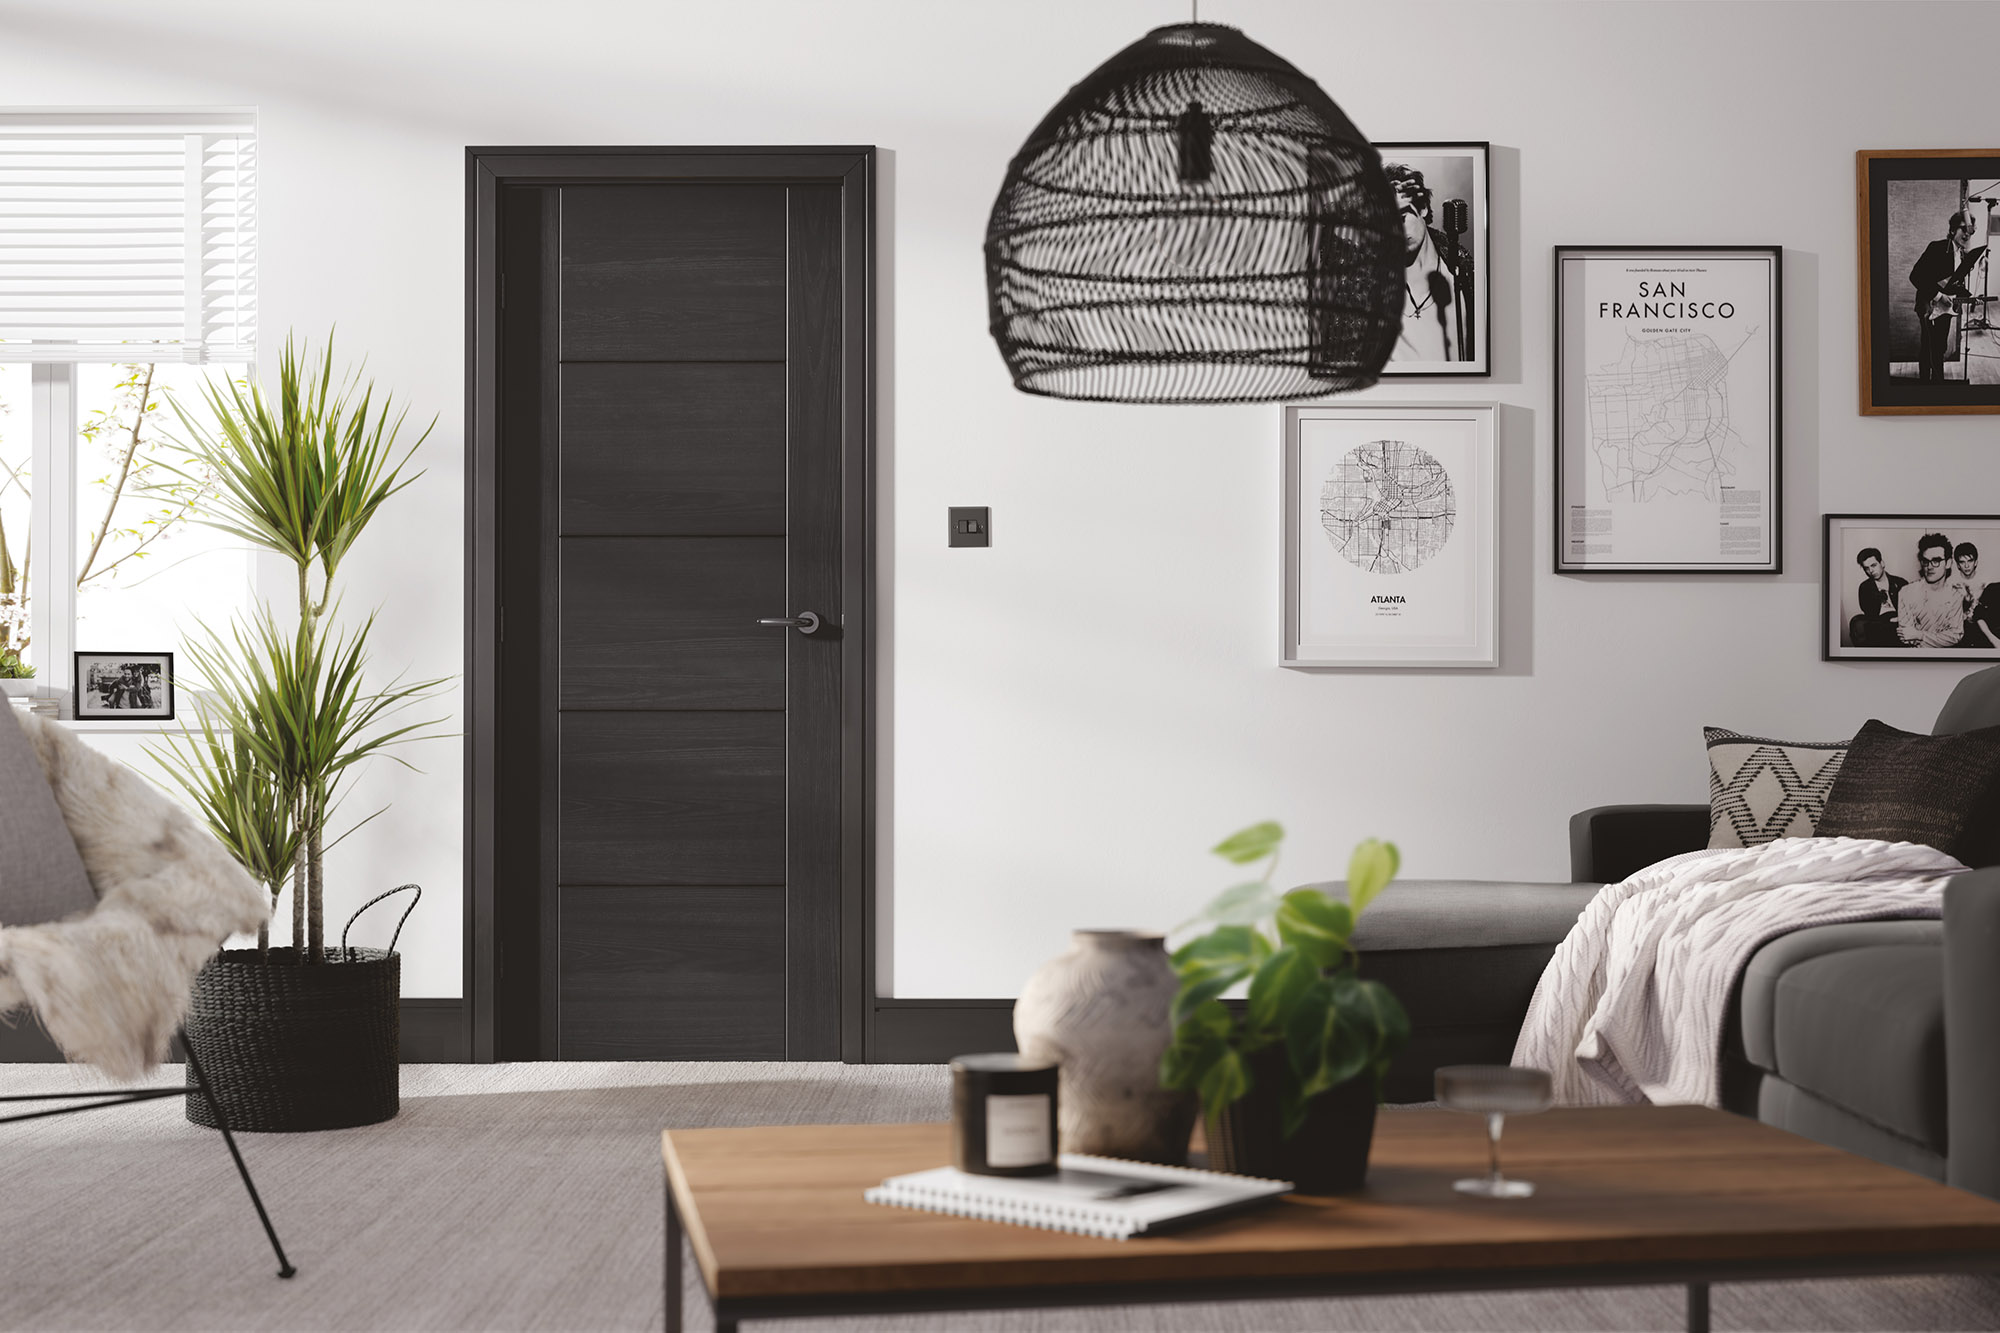 black internal doors in stylish room with black accents and black door handles